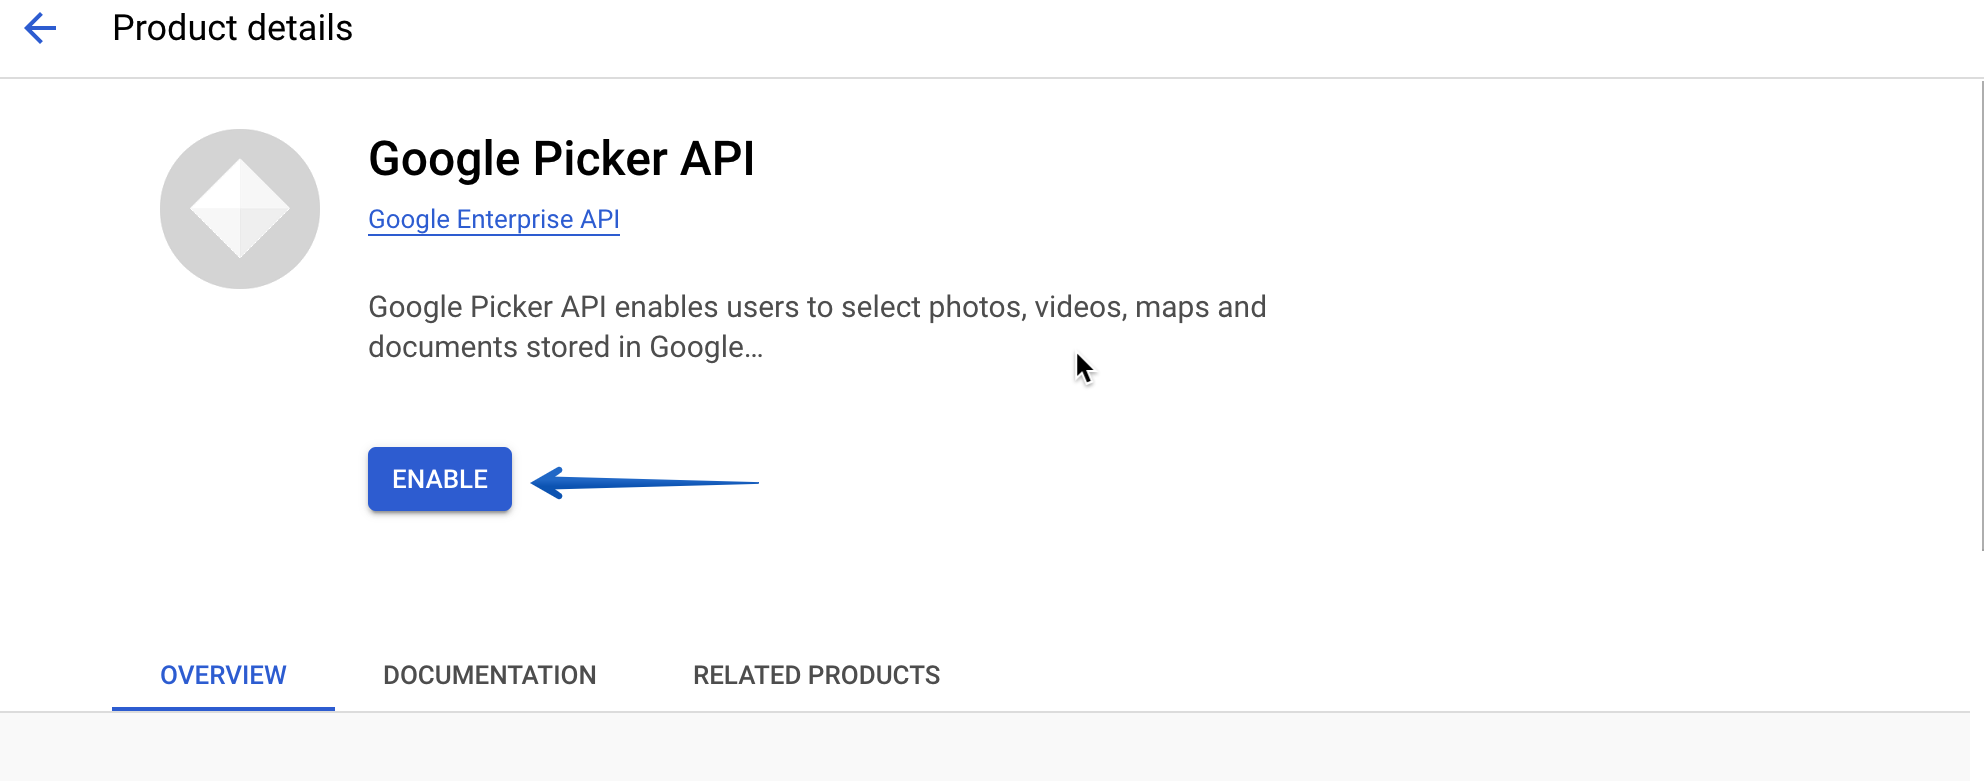 Enabling the Google Picker API